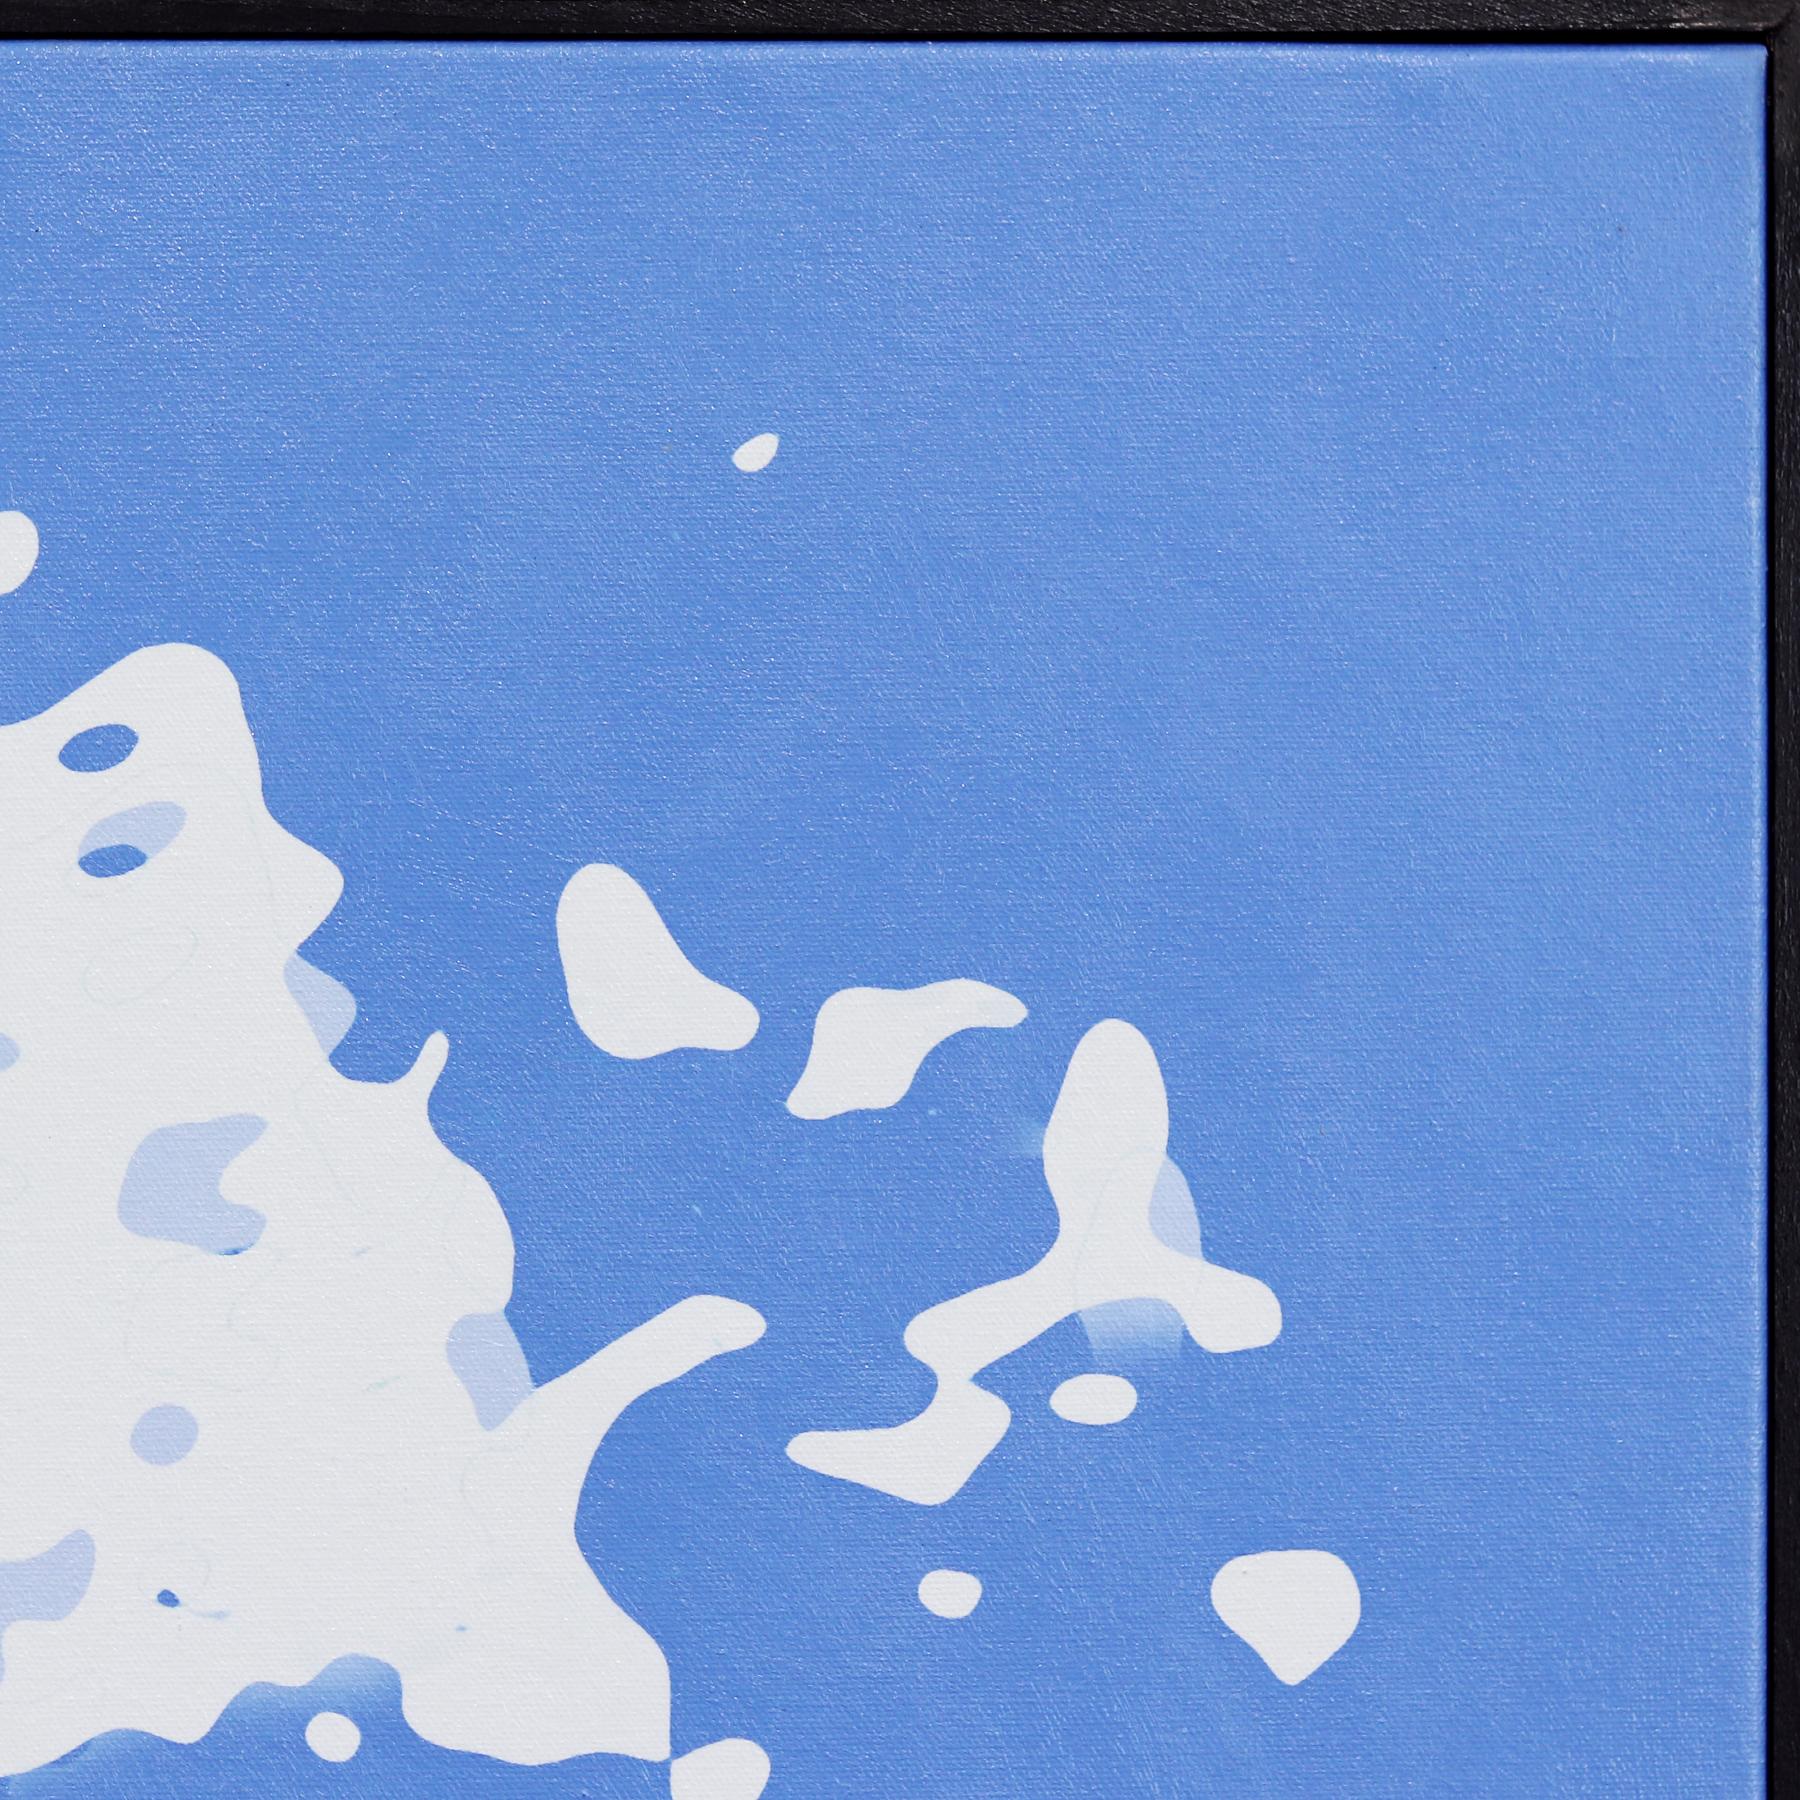 A Sudden Splash - Framed Original Vibrant Water Painting Mid Century Modern For Sale 2